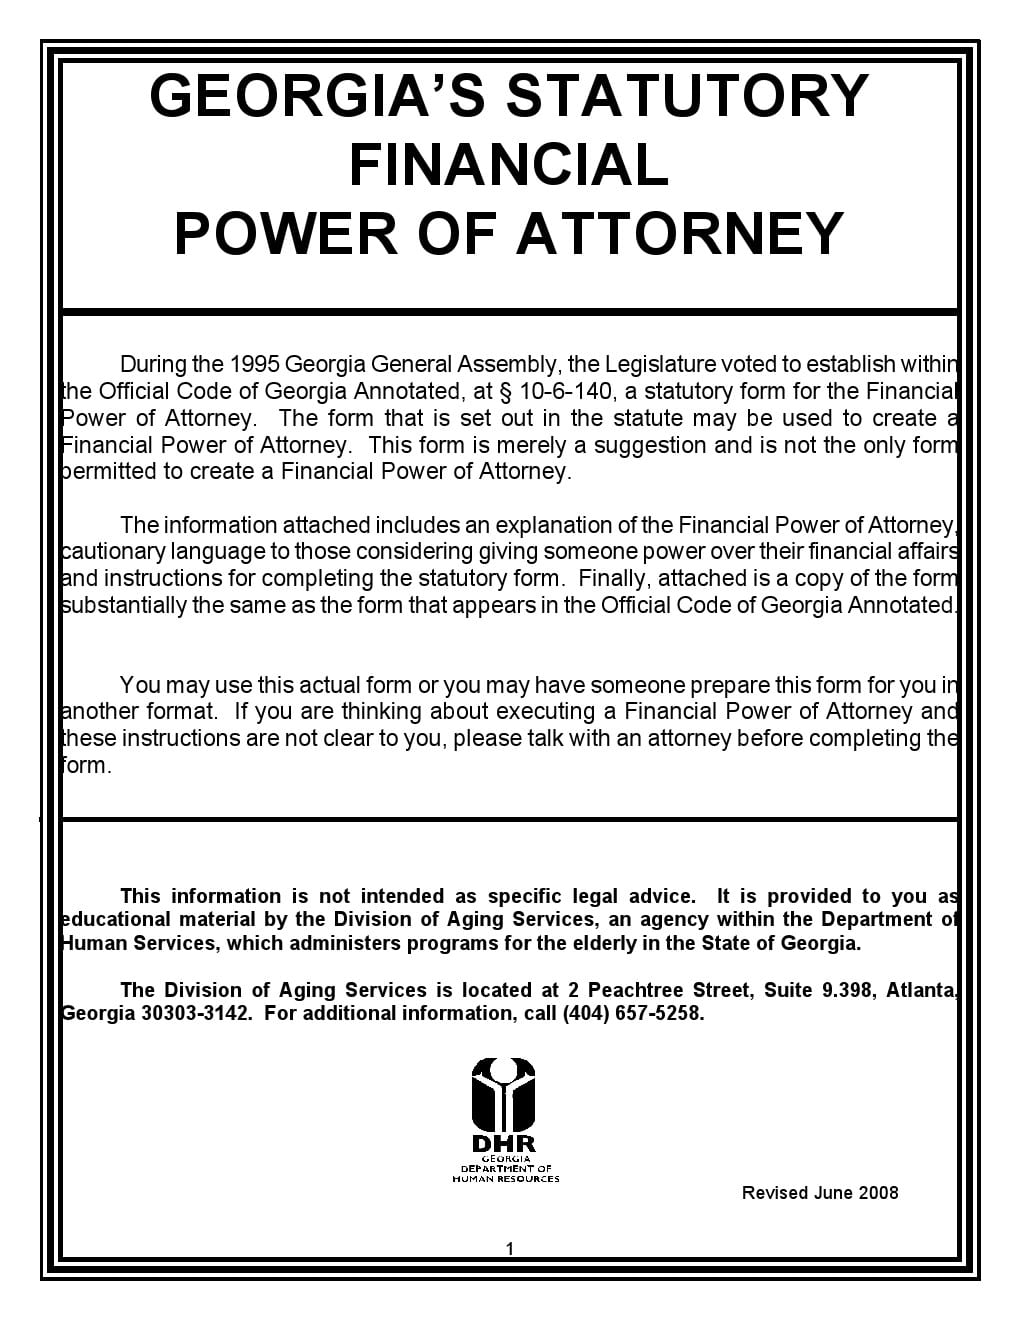 Statutory Fiancial Power of Attorney Georgia